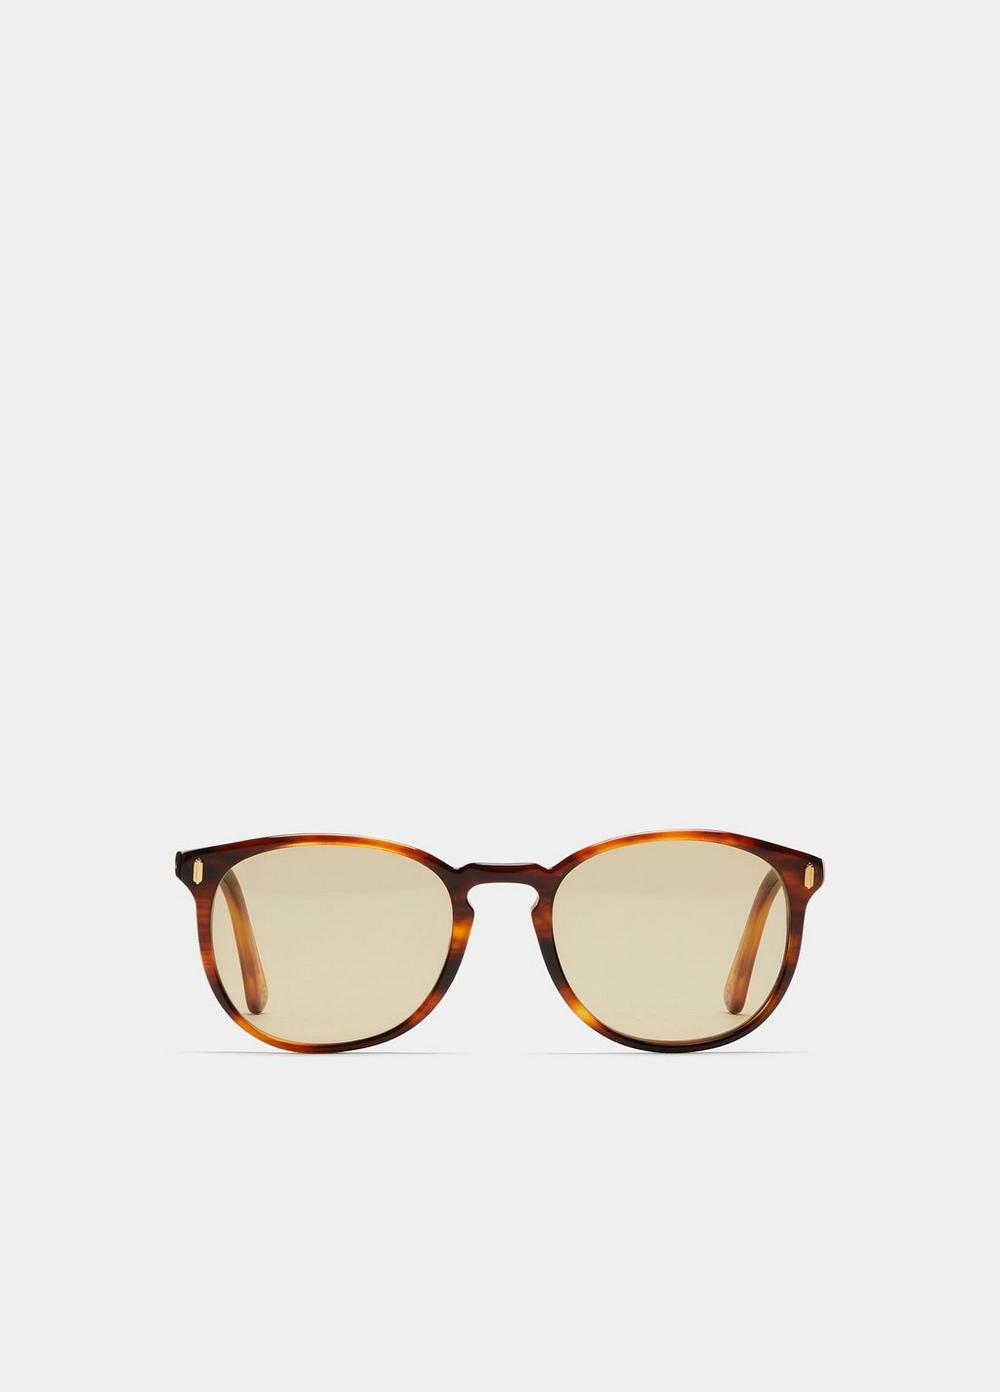 DOM VETRO / Vintage Tortoise Sunglasses